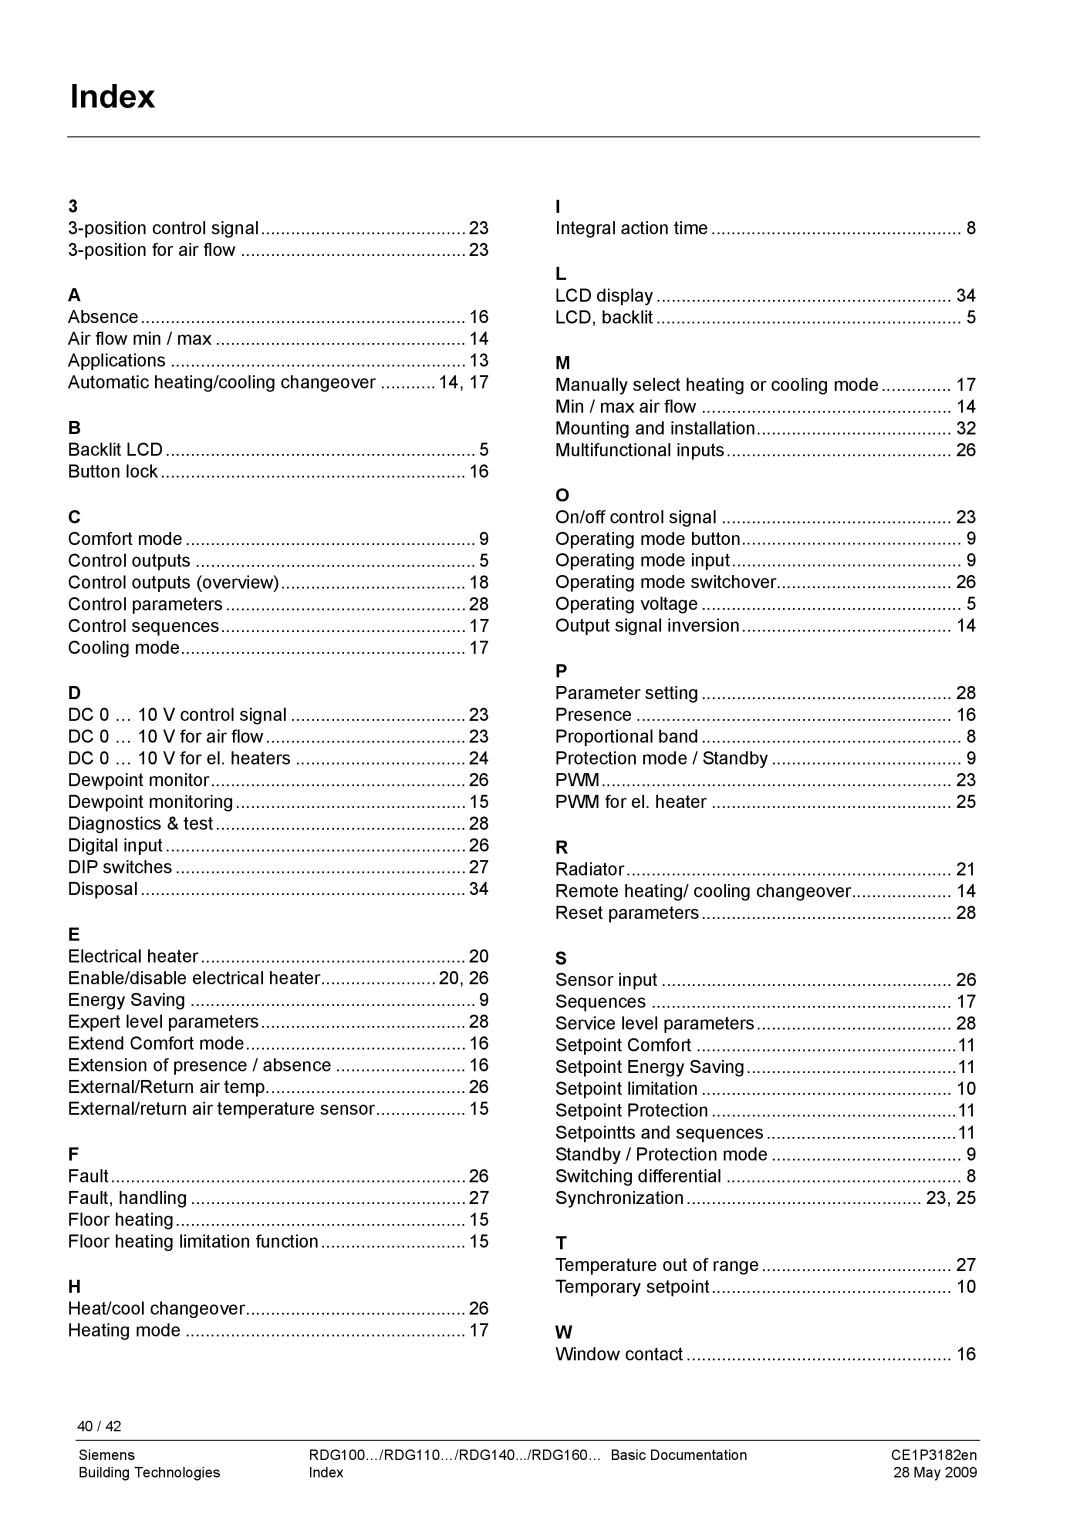 Siemens RDG400 manual Index 